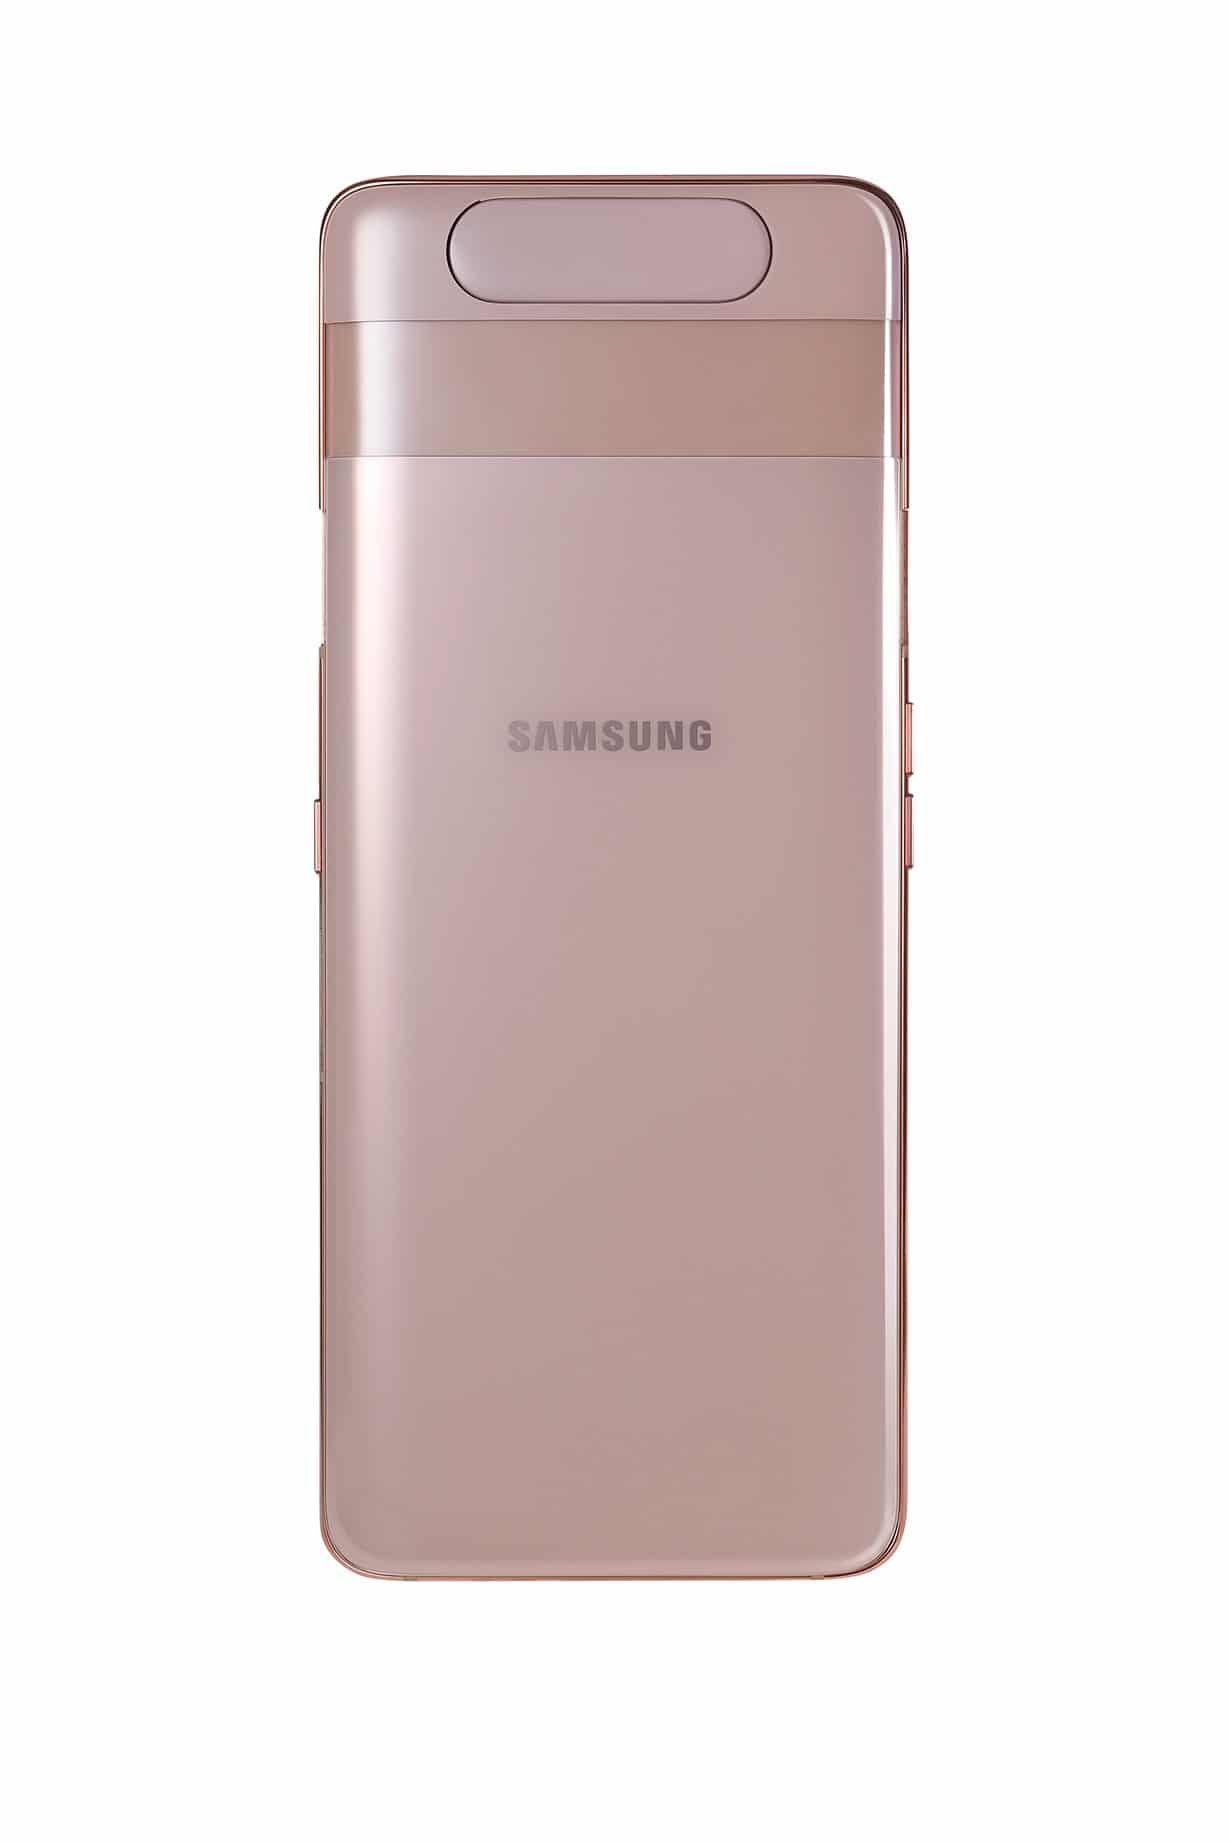 Samsung เปิดตัว Galaxy A80 กล้องหมุนได้ แจ่มทั้งหน้าและหลัง 7